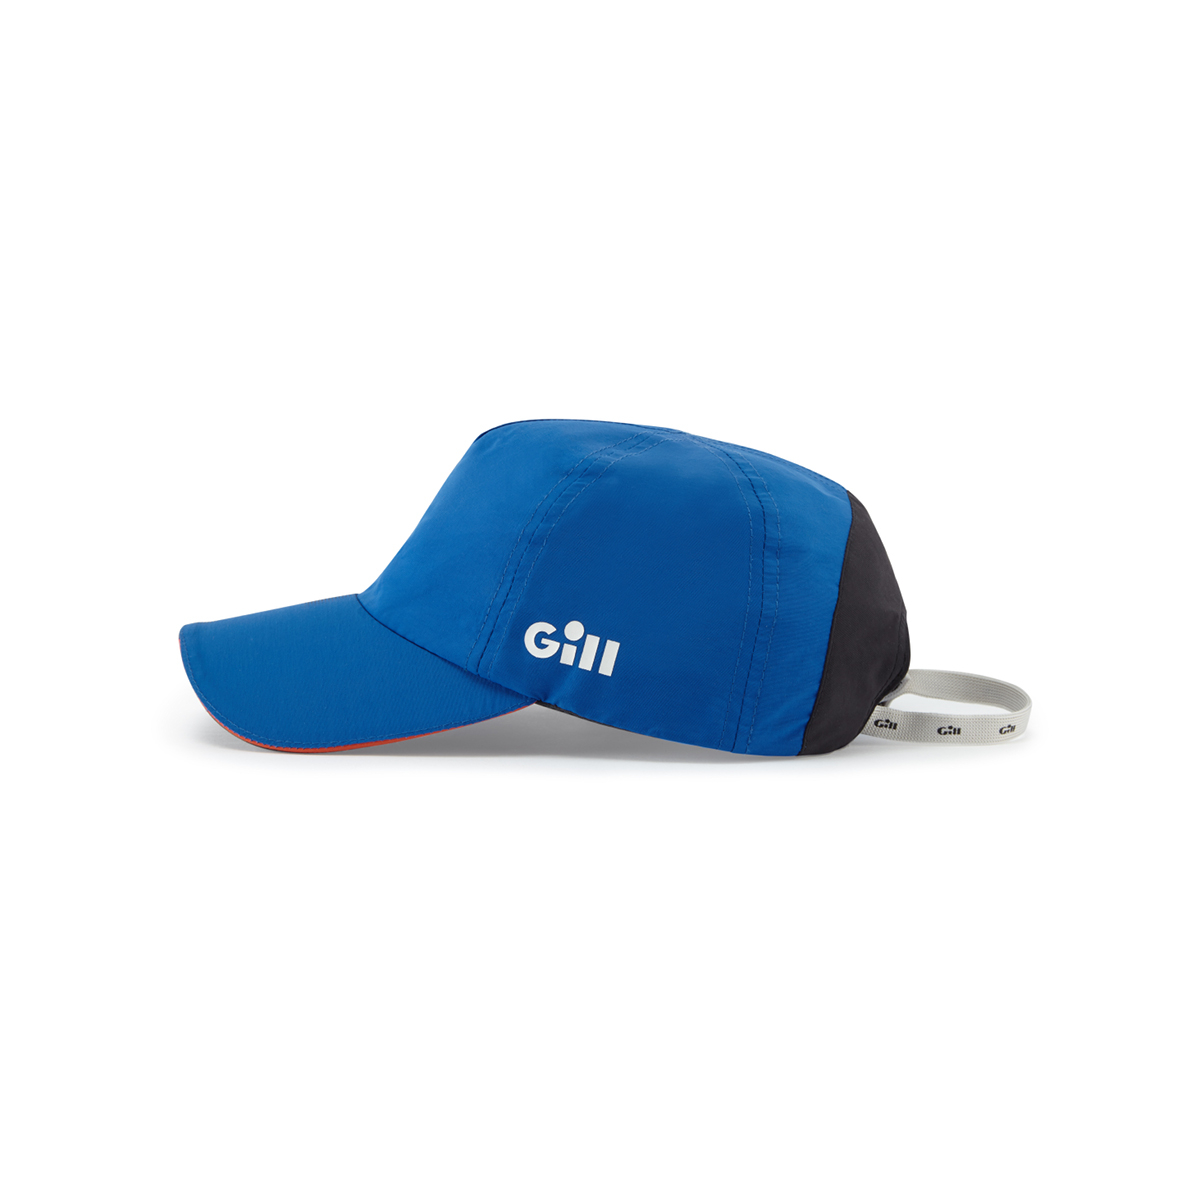 Gill Race Cap casquette voile bleu